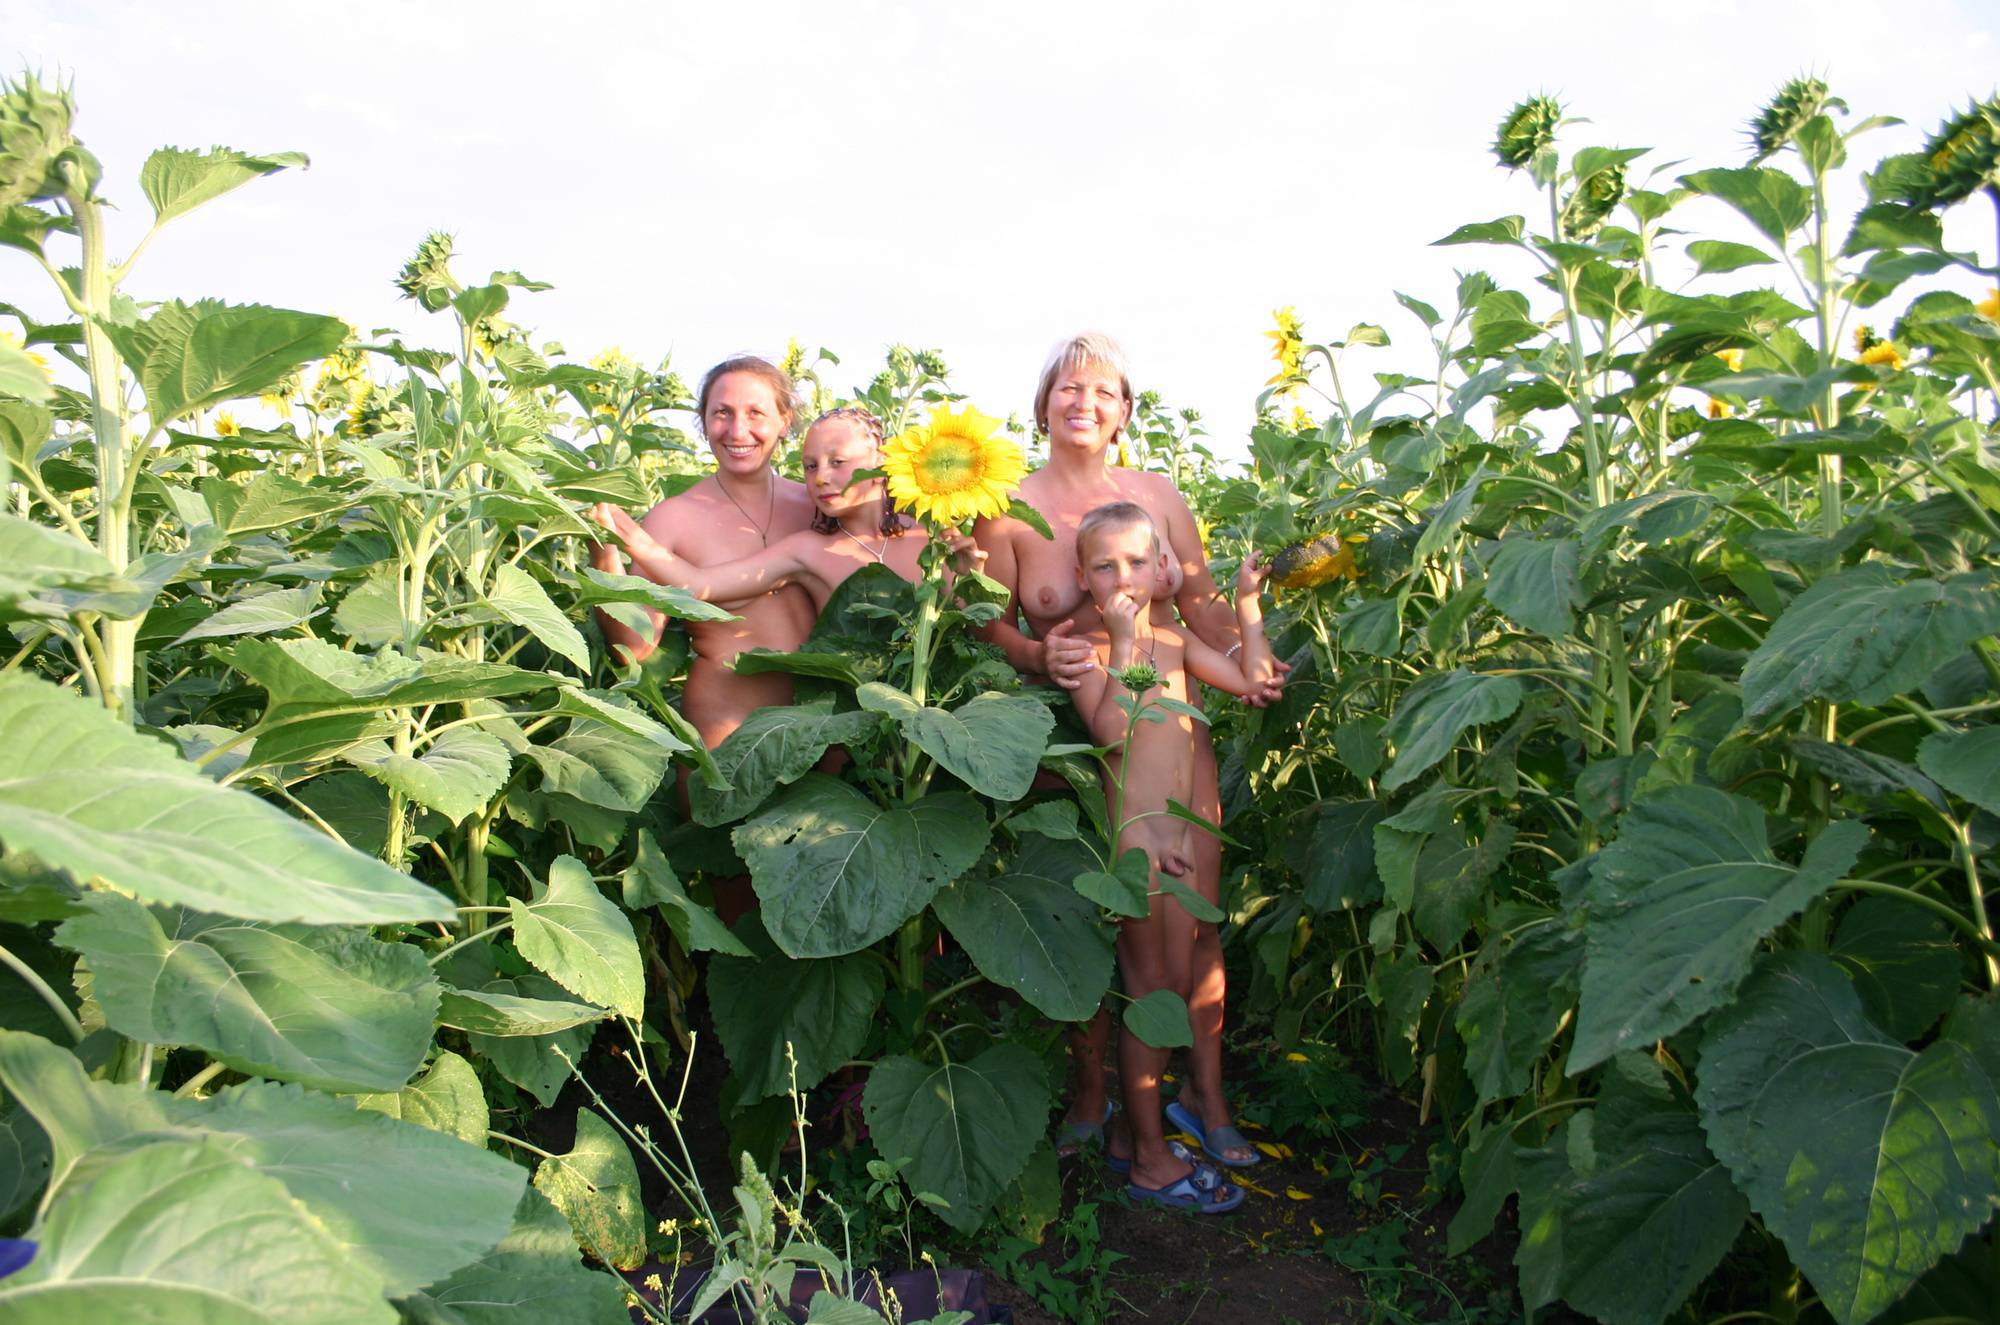 Purenudism Images-Outdoor Sunflower Fields - 1